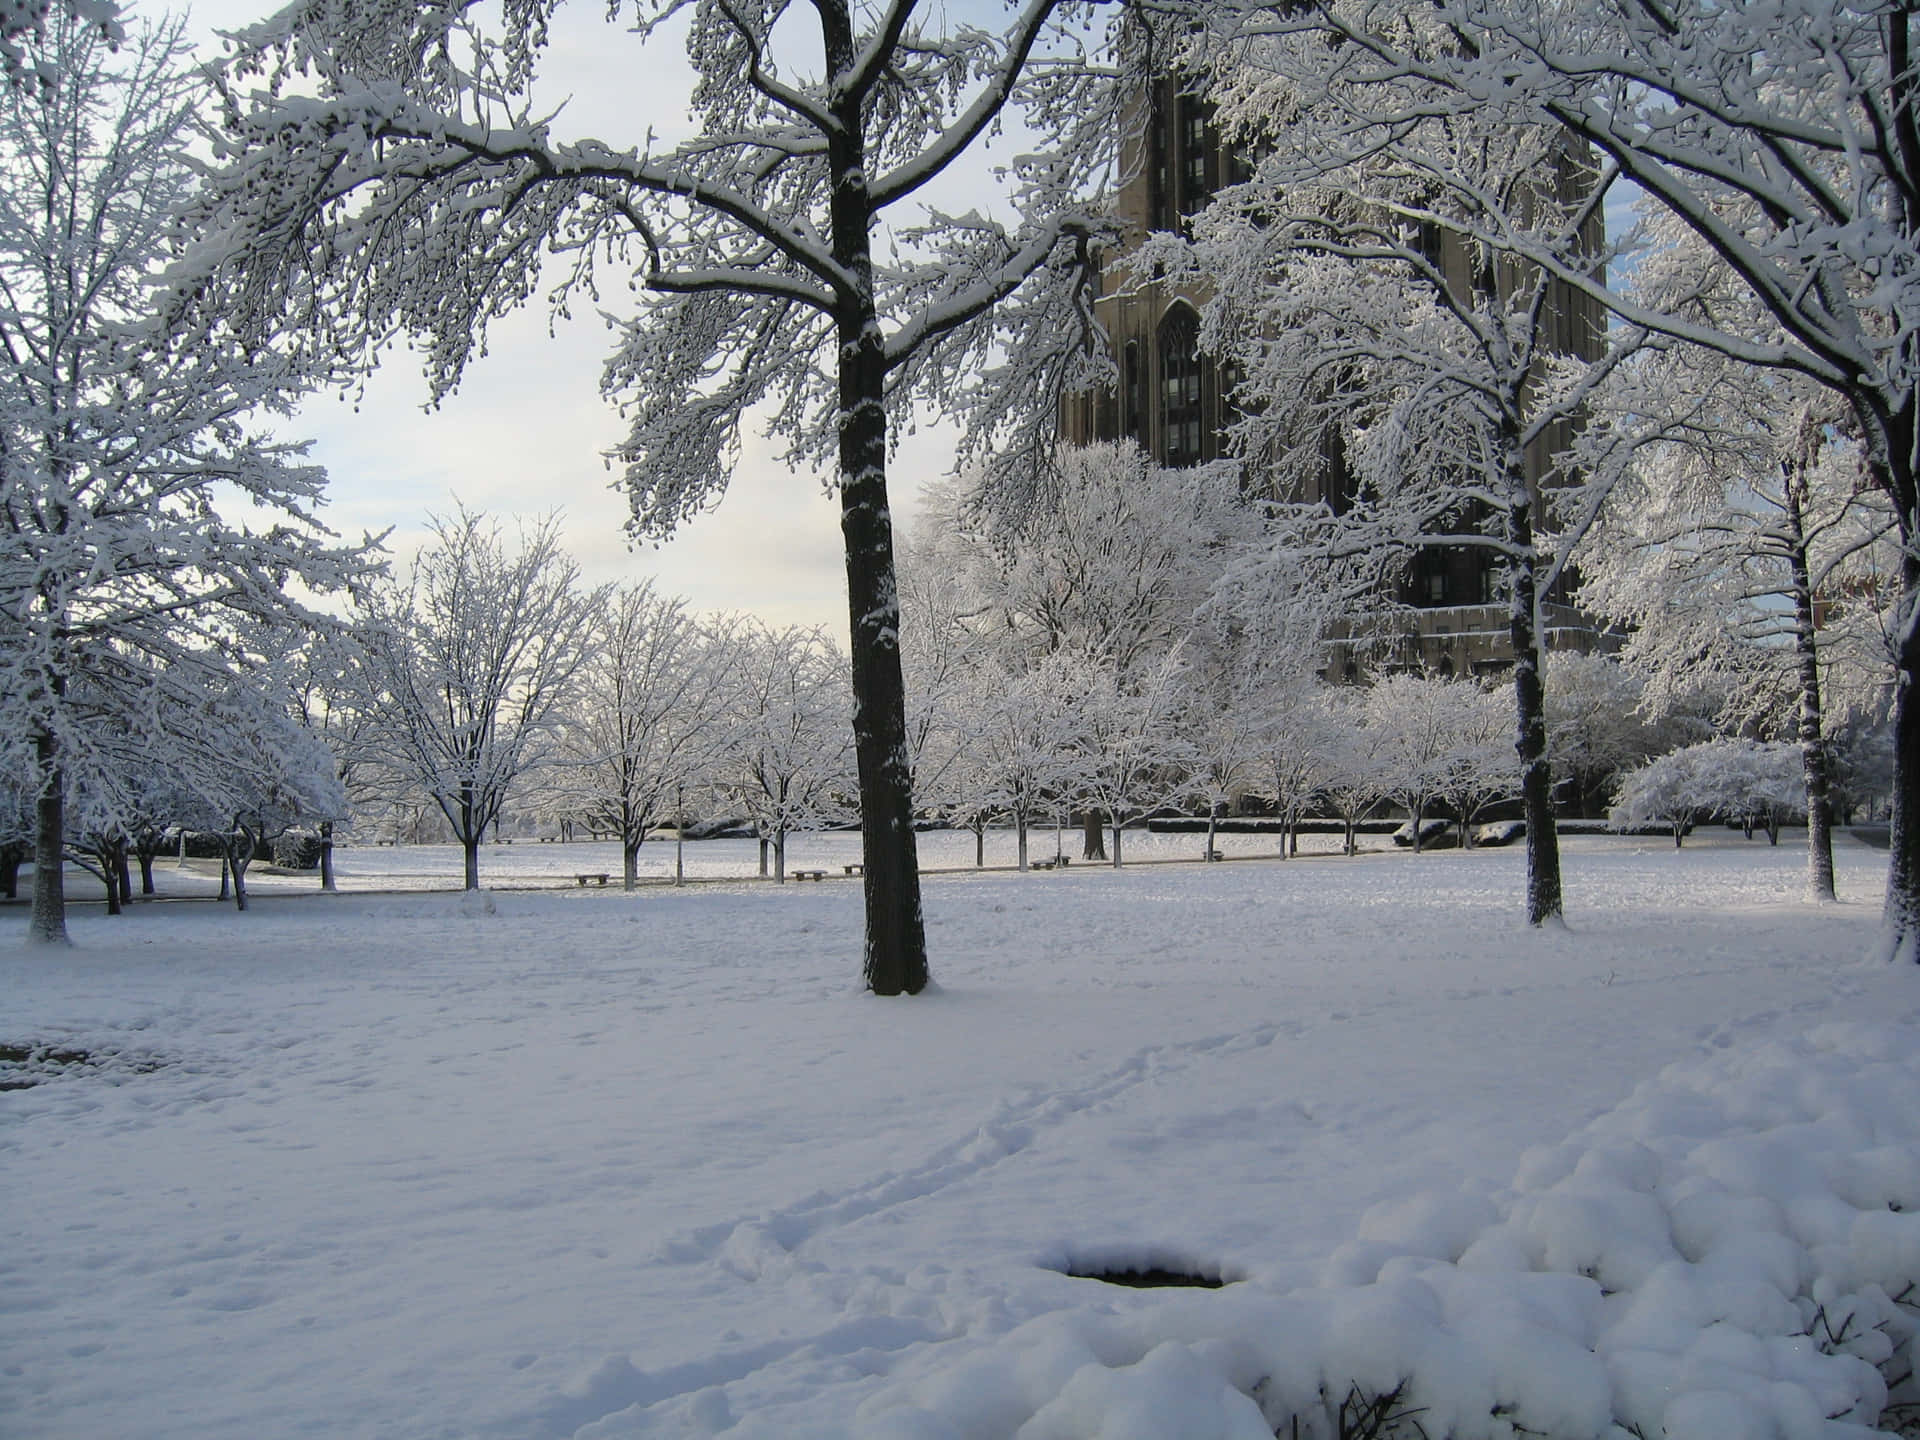 Imagemde Galhos De Árvores Congelados No Inverno.